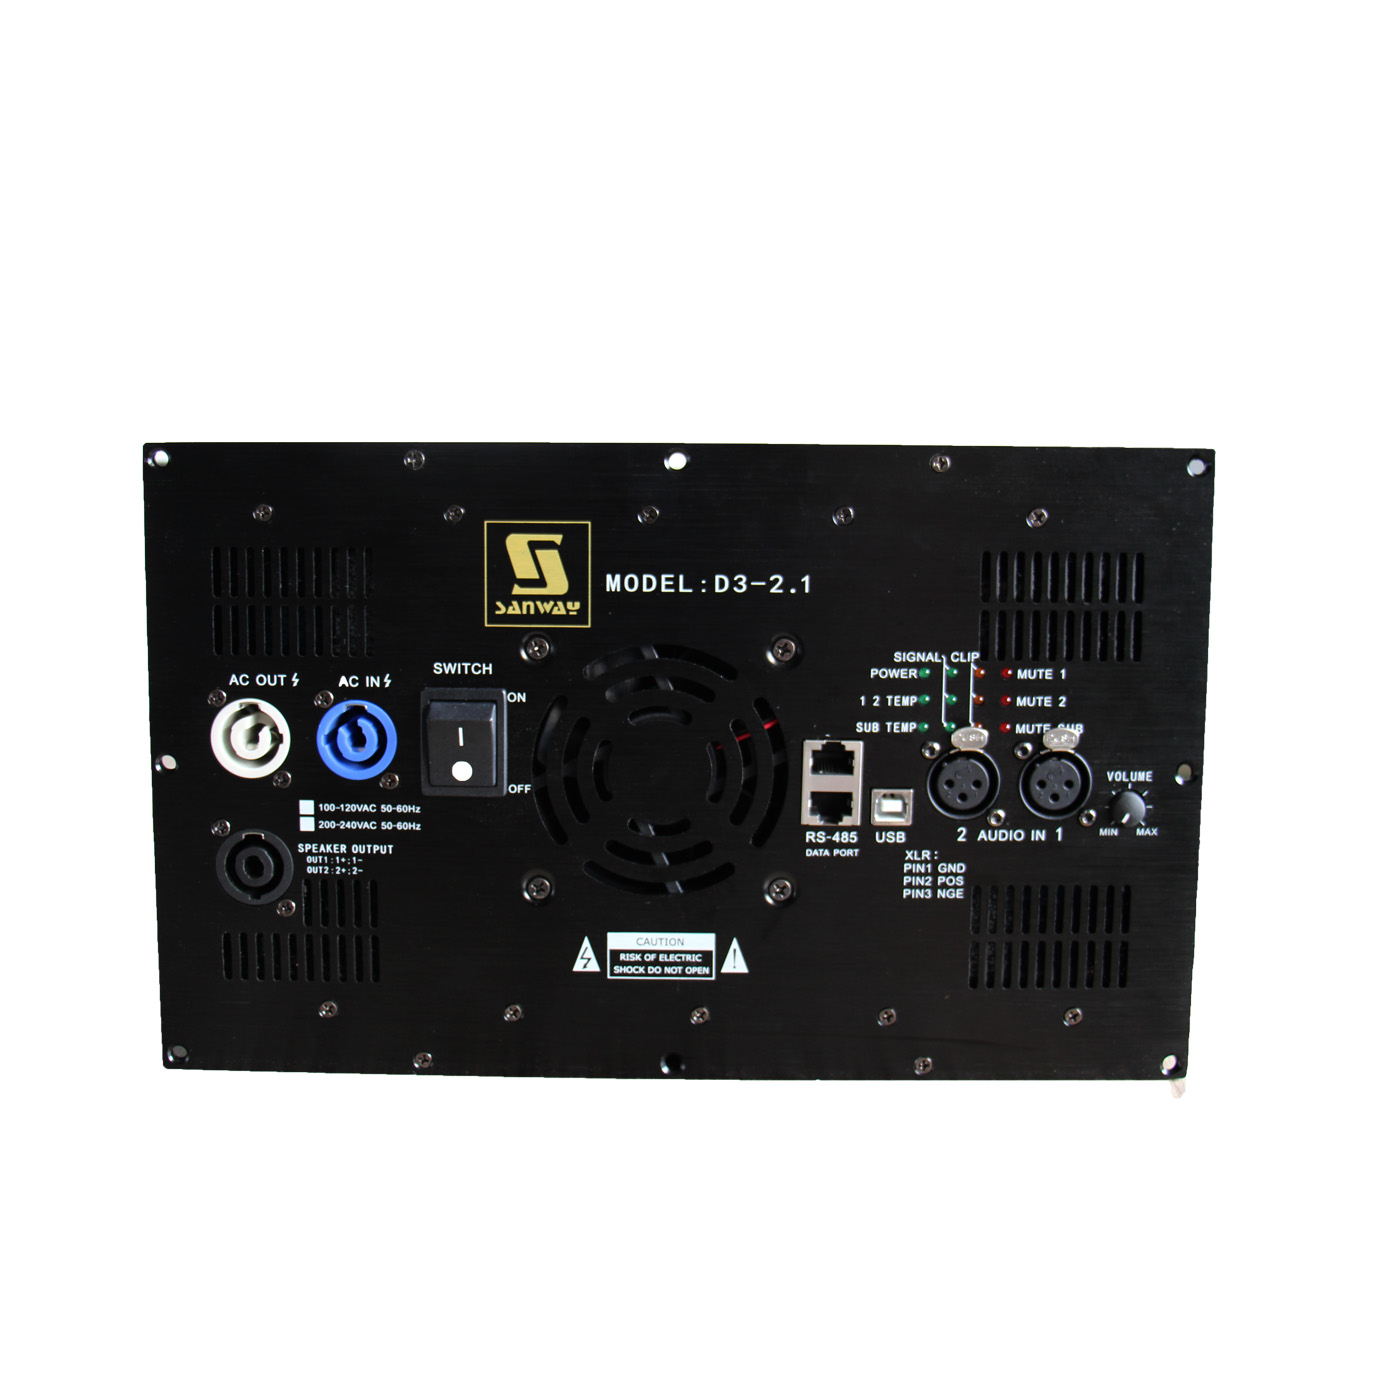 Amplificador de placa estéreo D3-2.1 com DSP para sistema de home theater de 2.1 canais